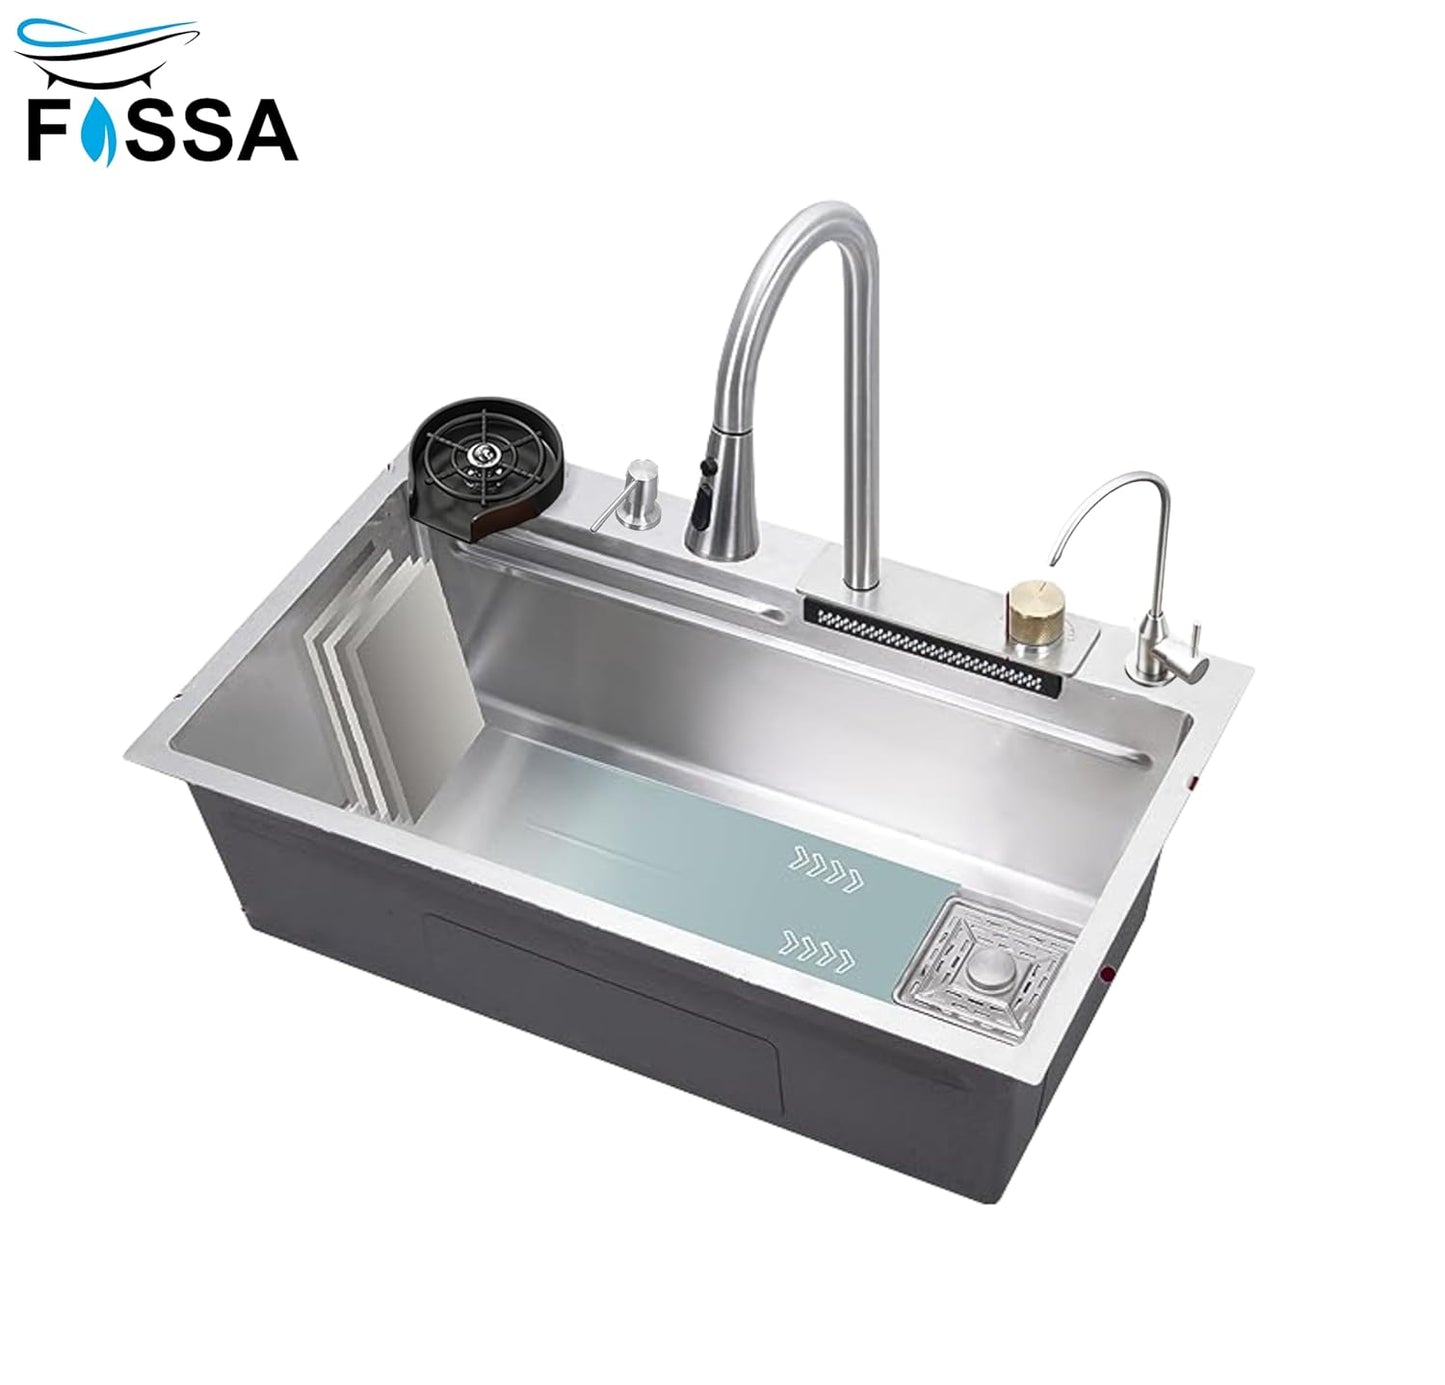 FOSSA 30"x18"x10" SS-304 Grade Handmade Single Bowl With Water Fall Kitchen Sink, Matte Finish, With Basket